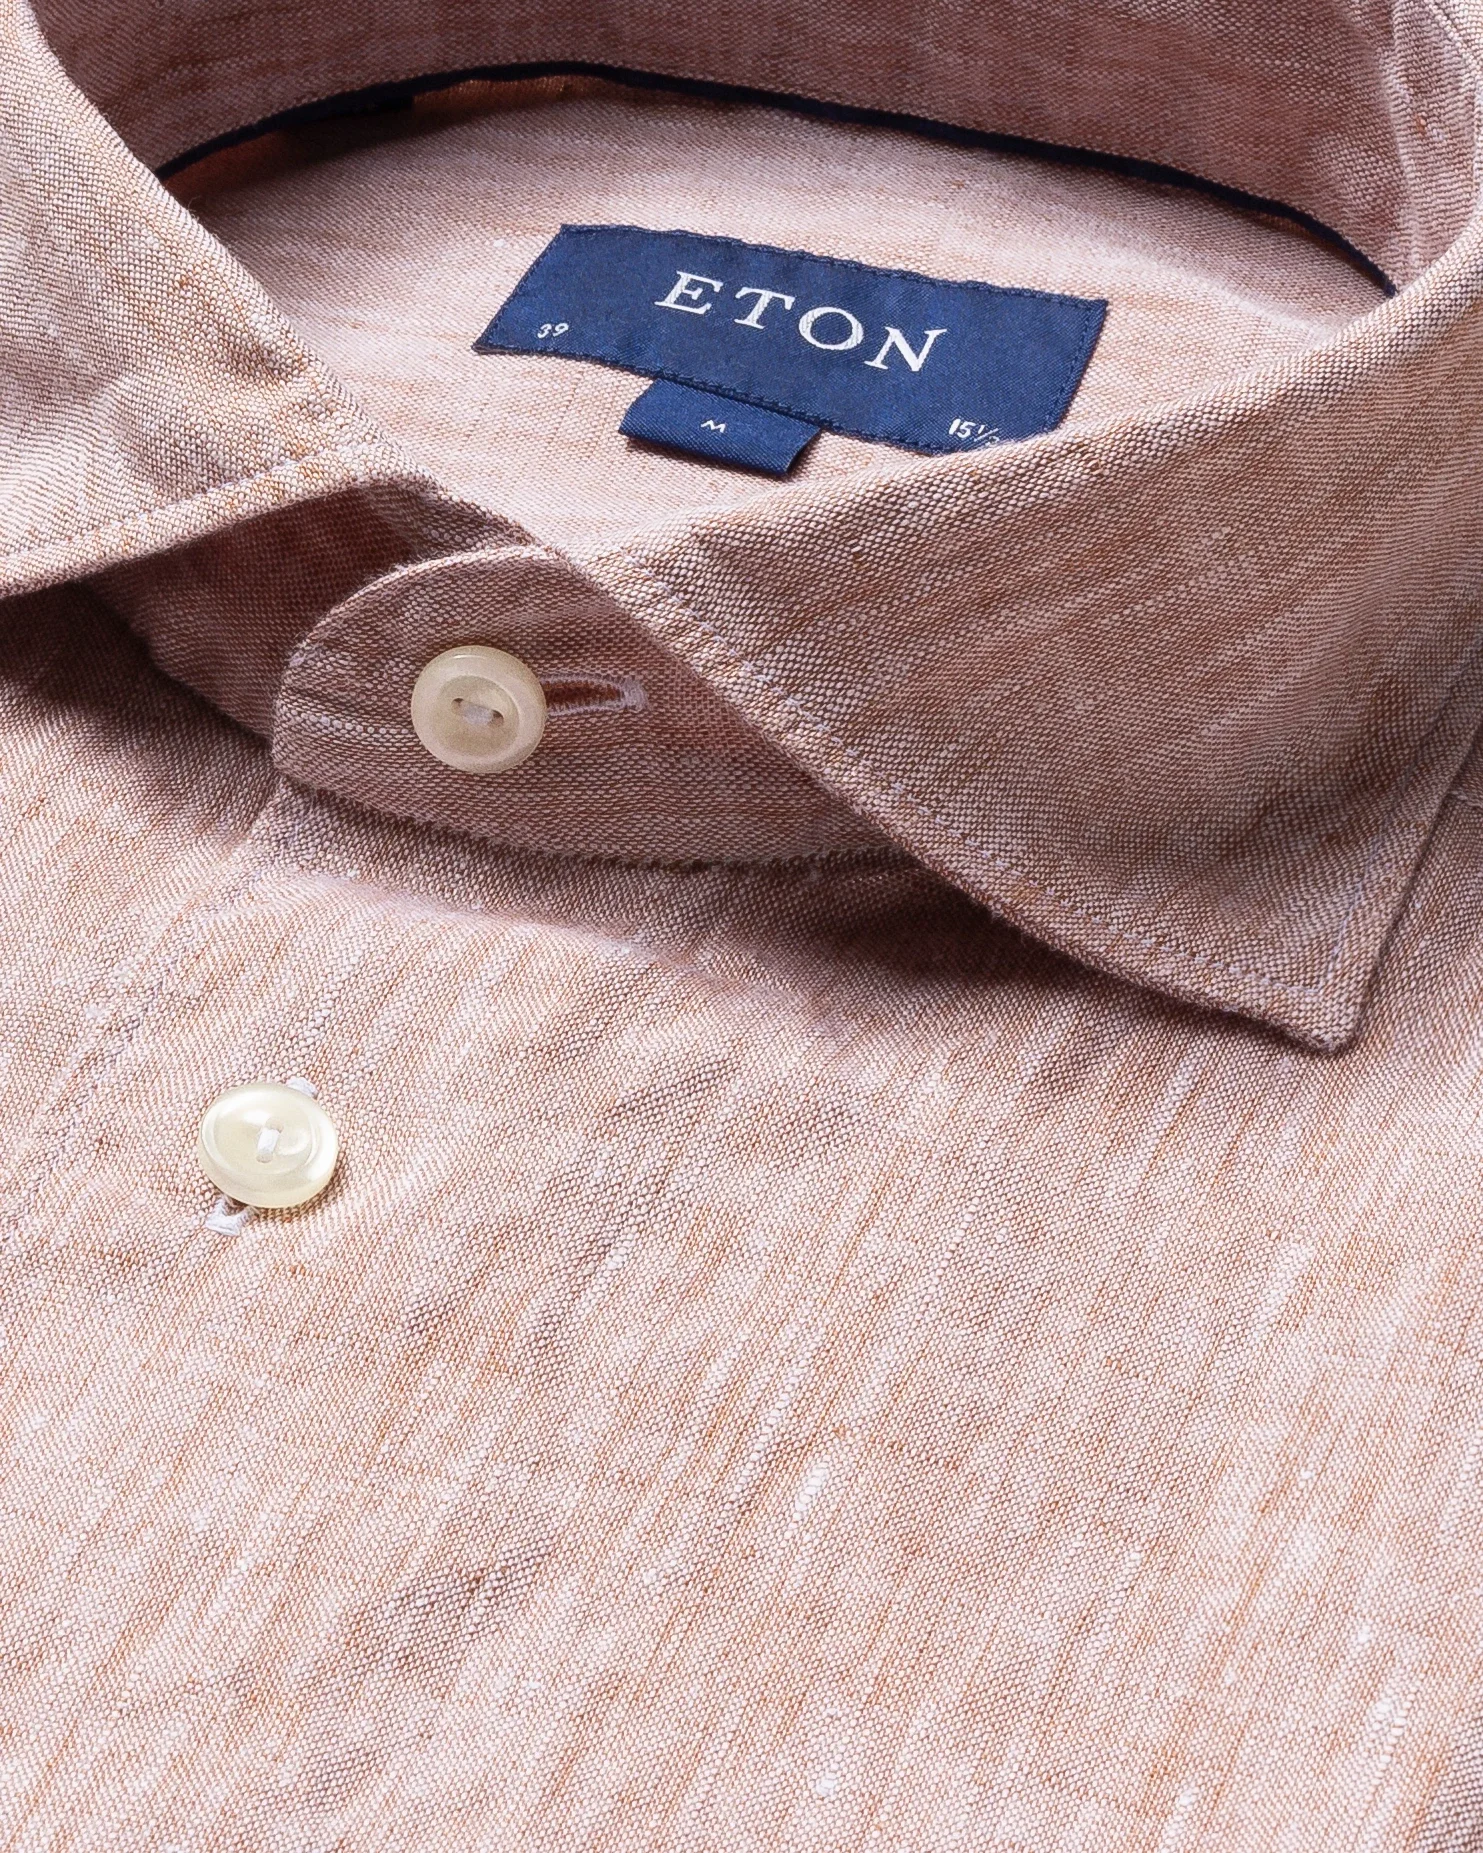 Eton - beige linen wide spread shirt